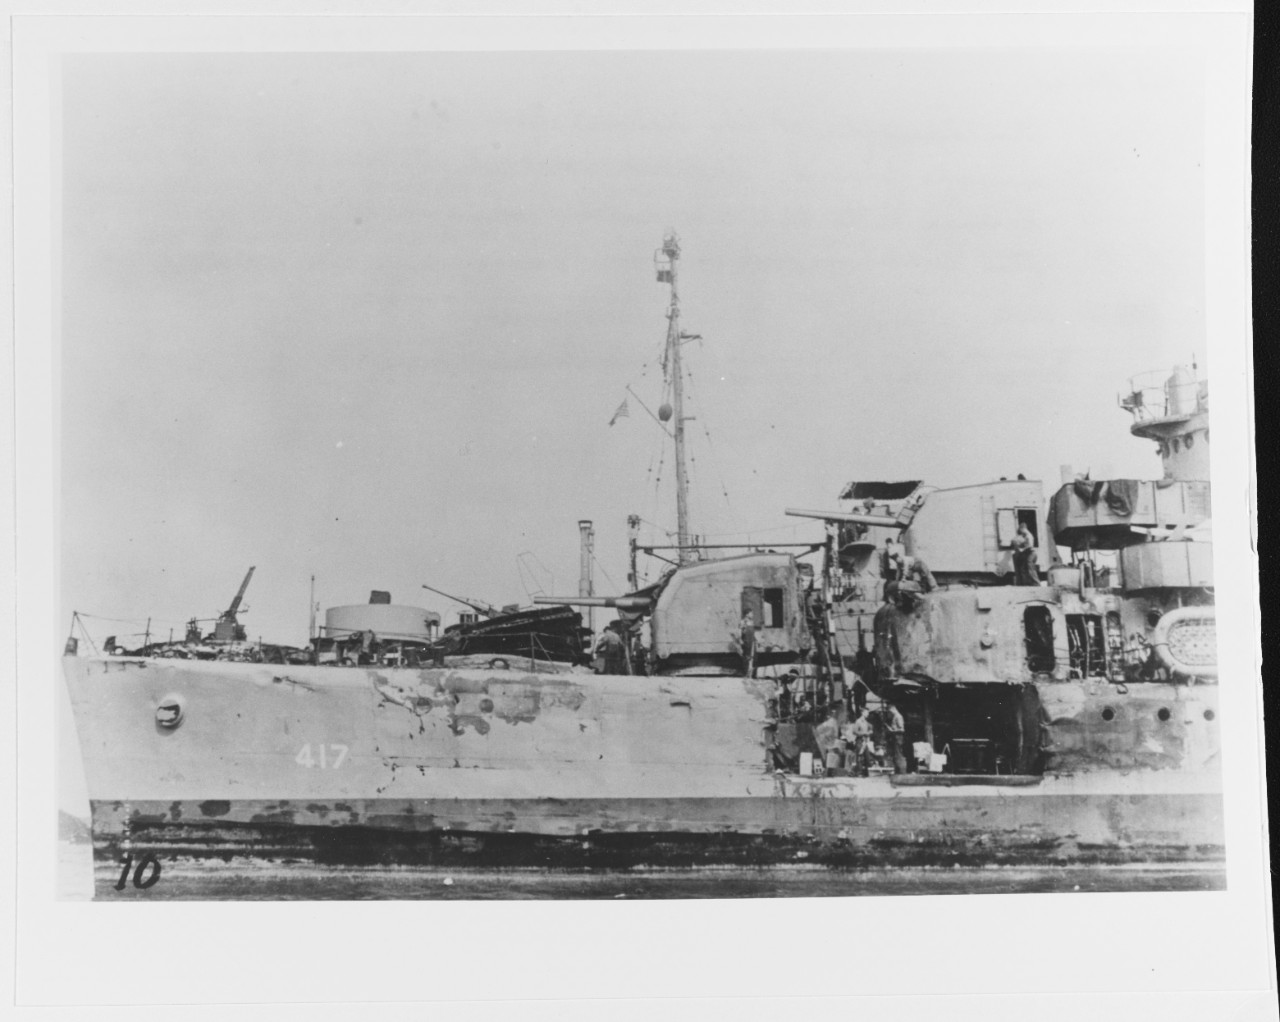 USS MORRIS (DD-417)